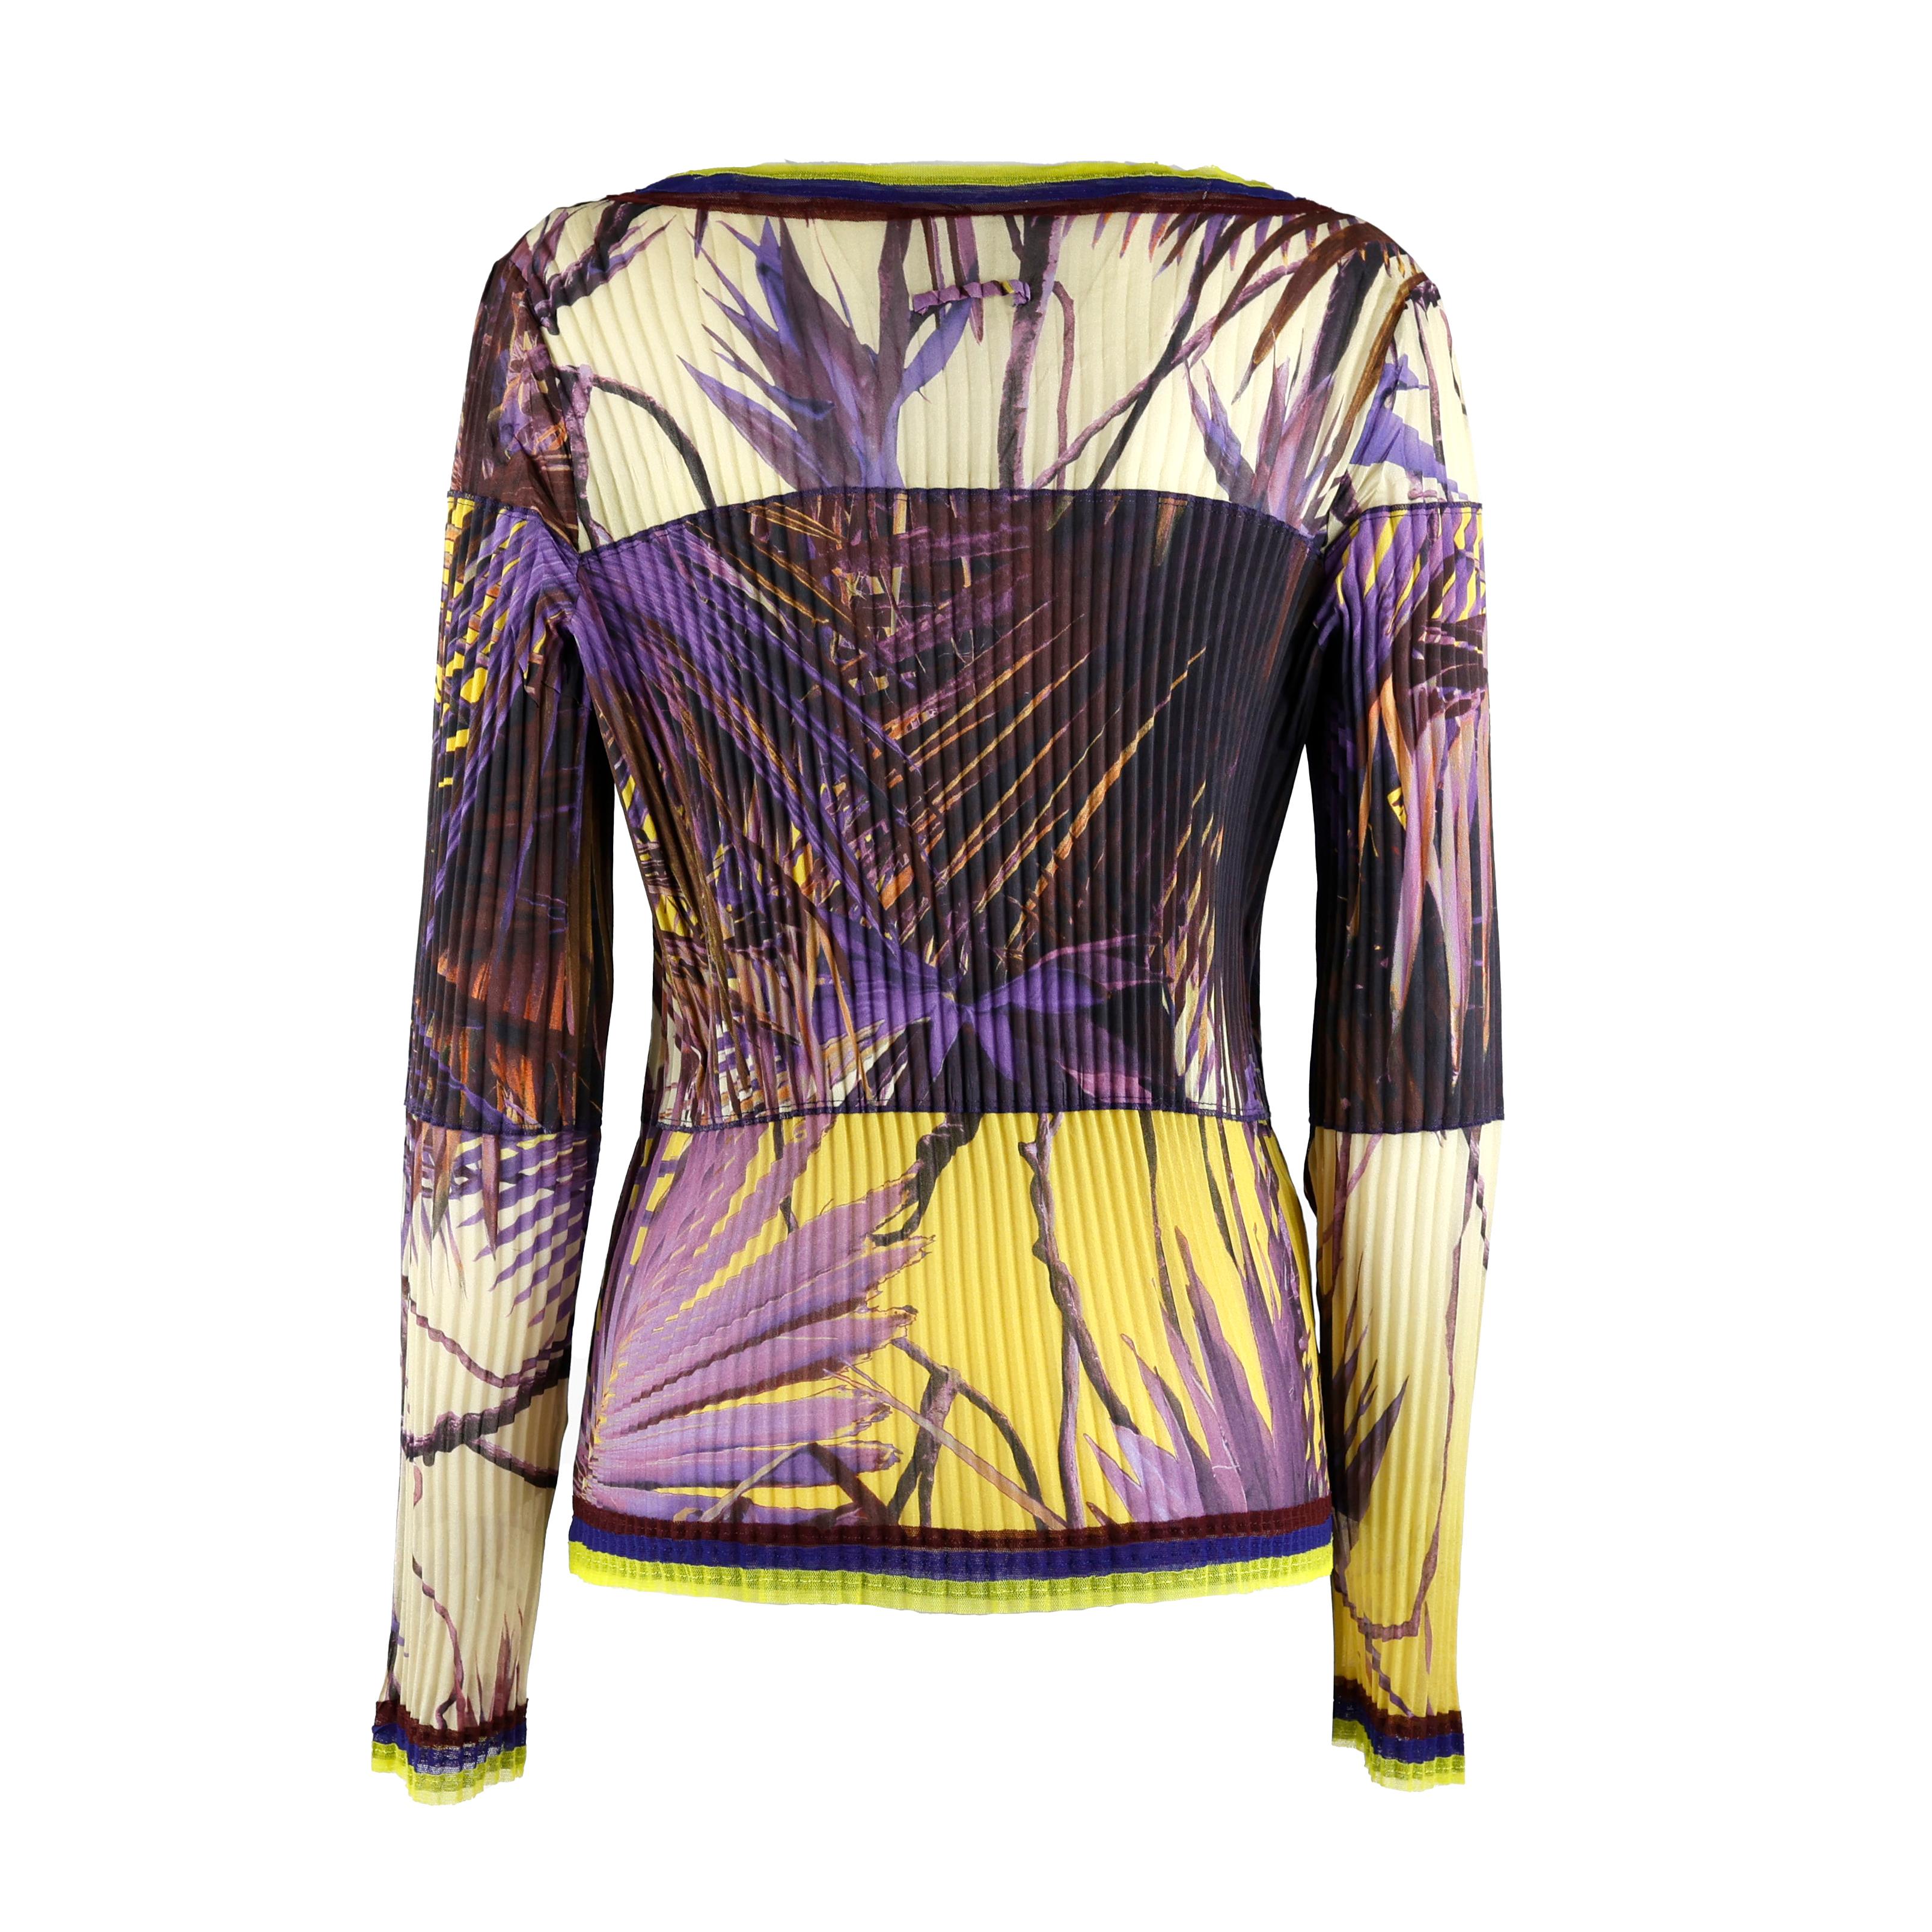 Jean Paul Gaultier top in multicolor mesh palm print. Size XL.

Condition:
Excellent.